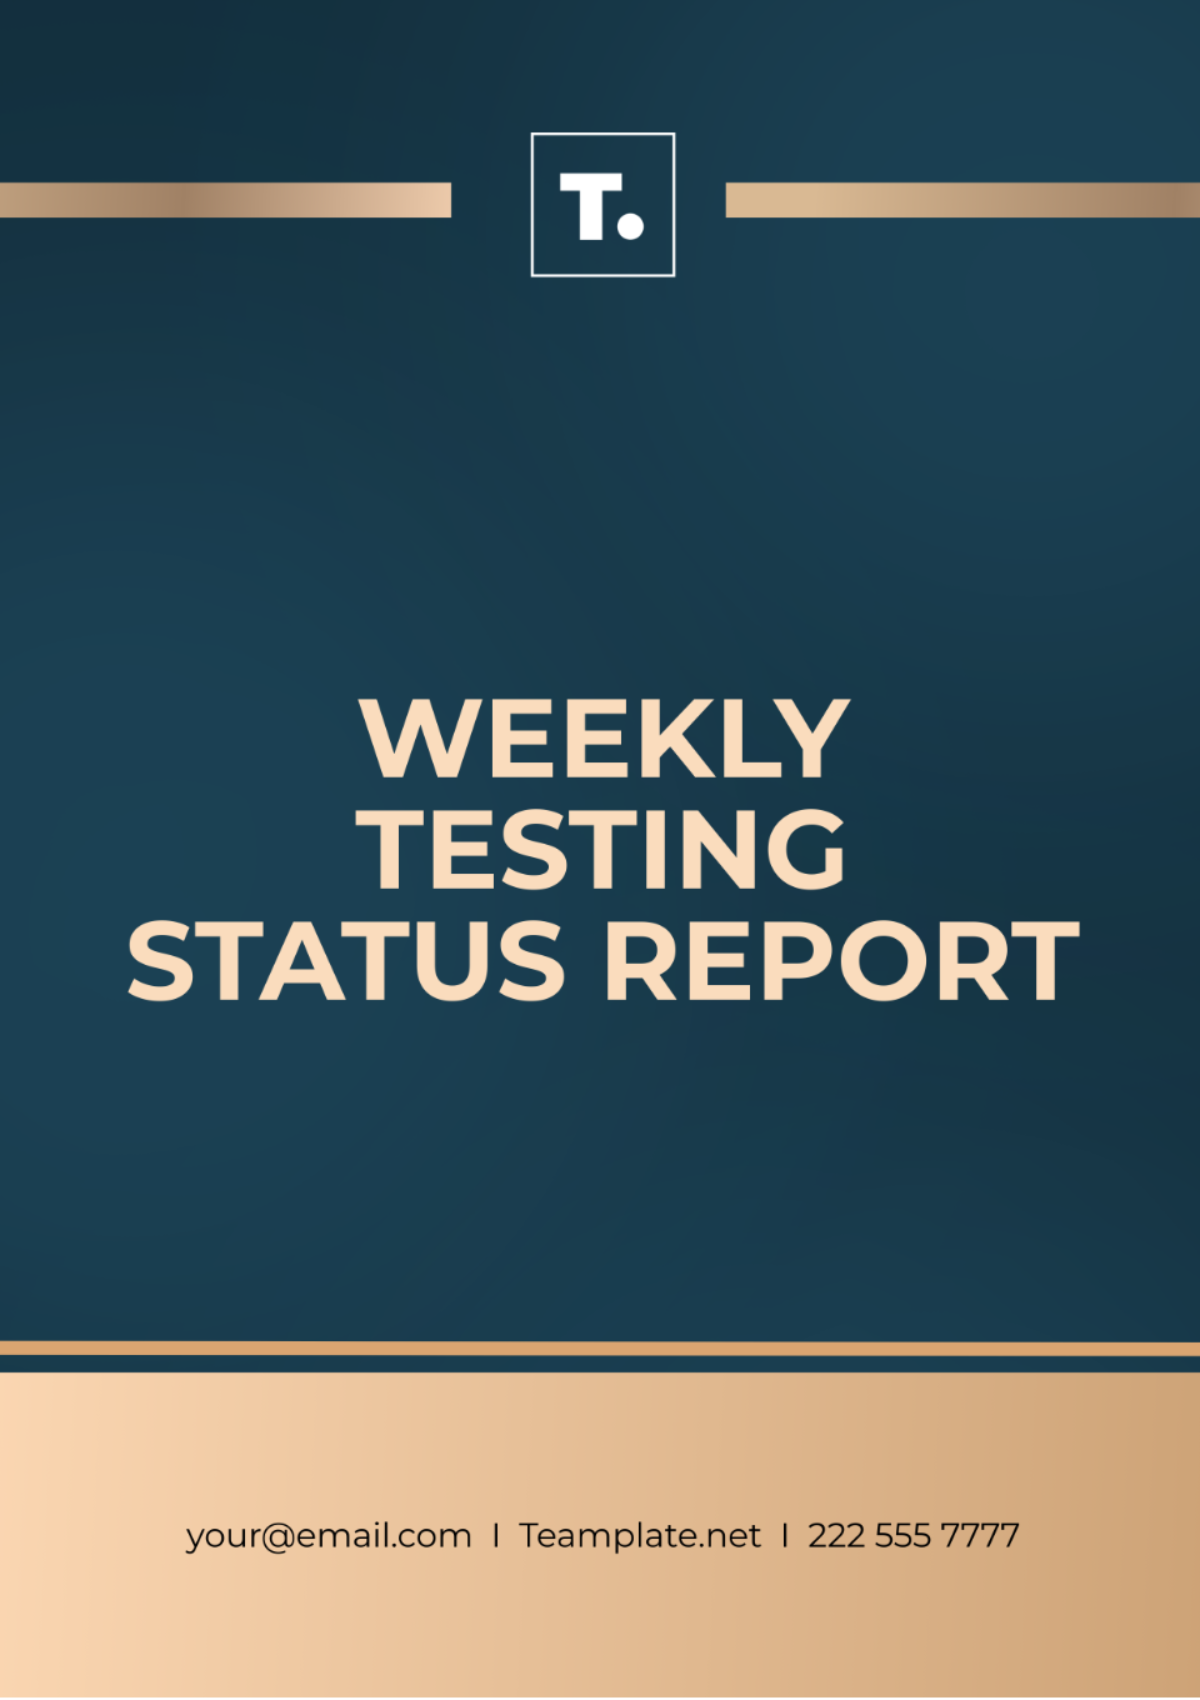 Testing Weekly Status Report Template